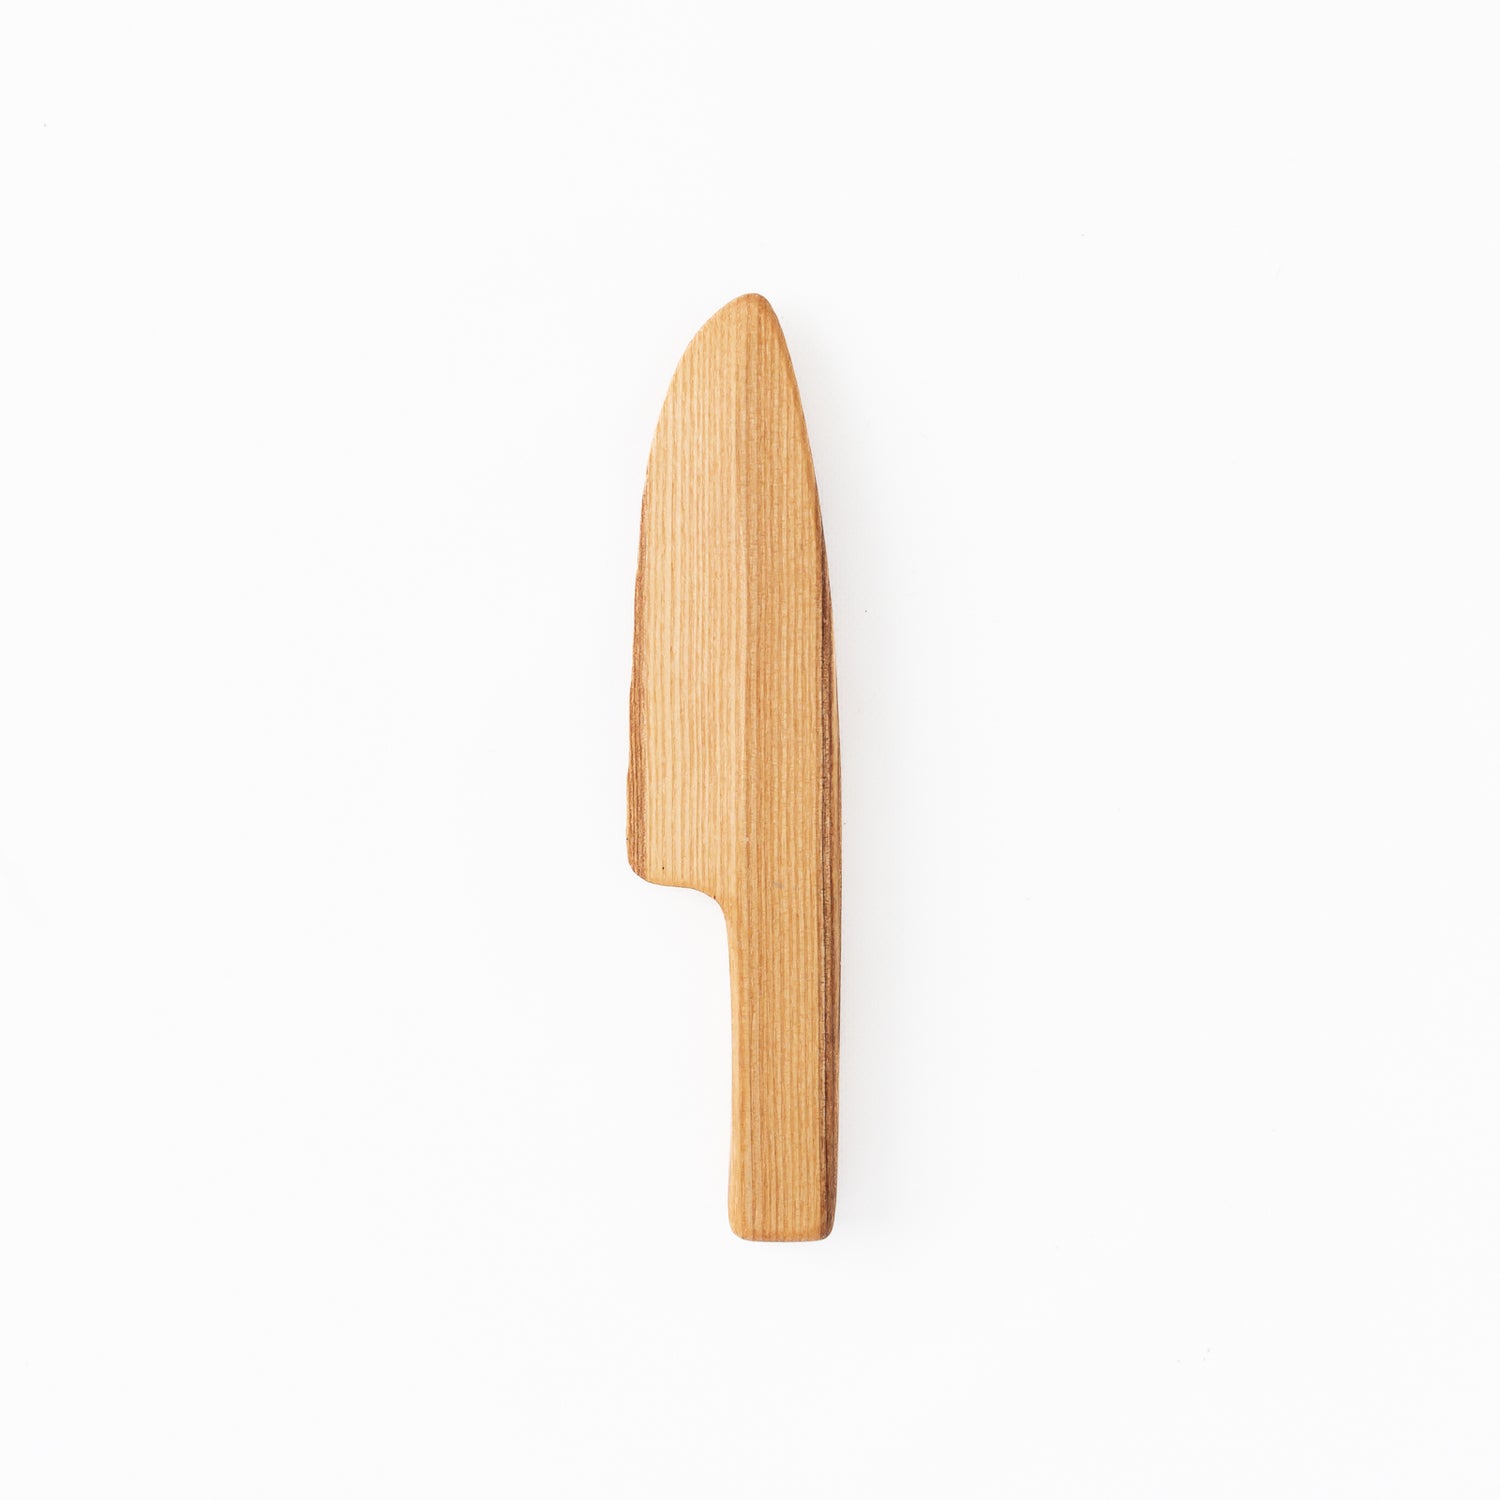 Toddler-Safe Wooden Montessori Knife by Wooden Caterpillar